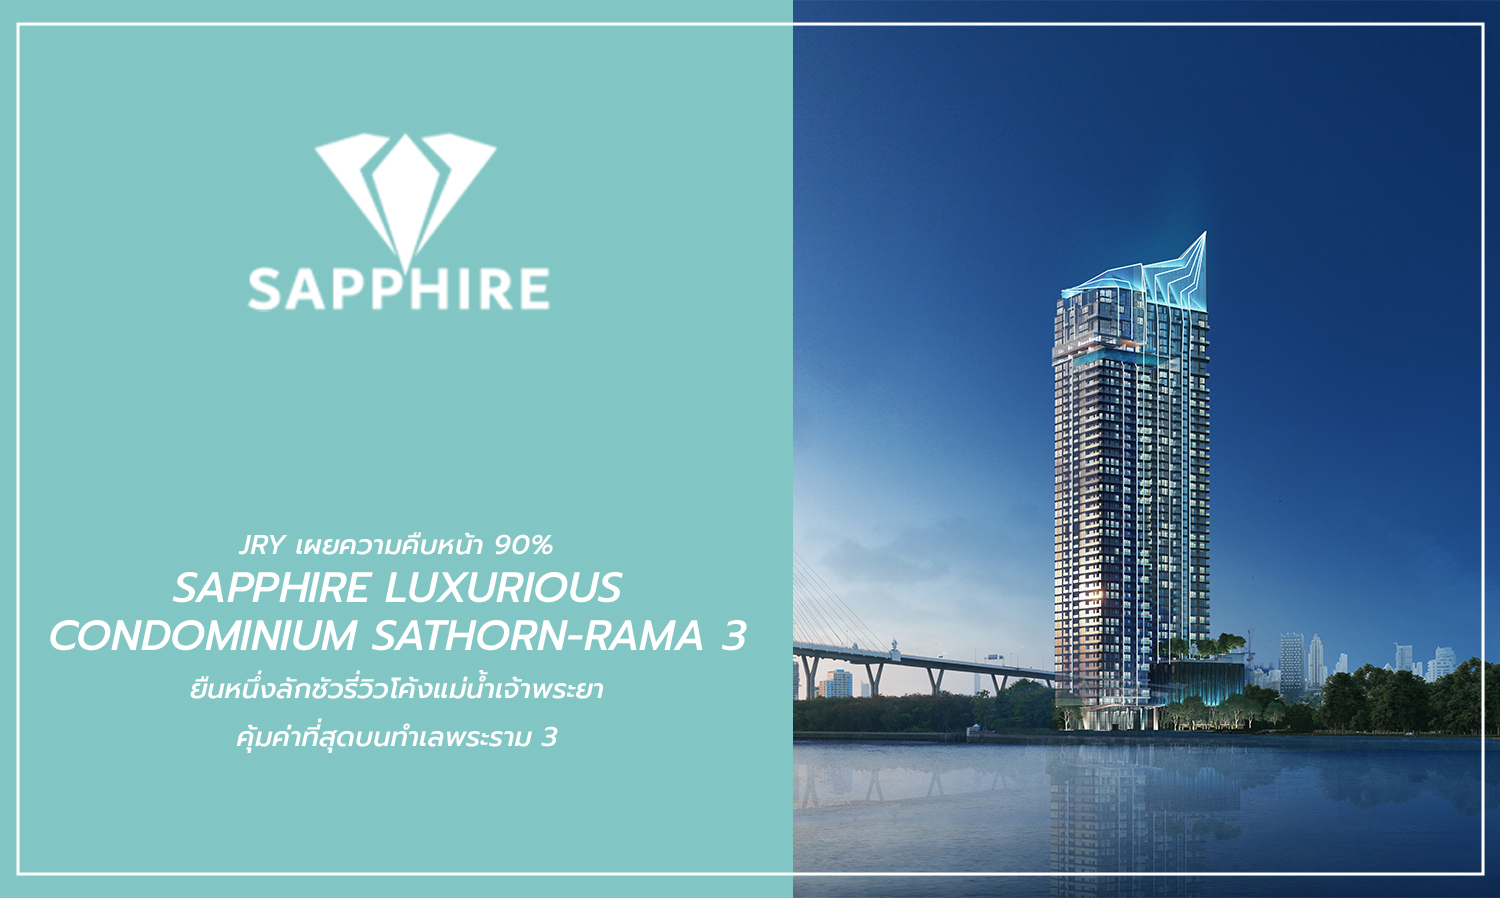 JRY เผยความคืบหน้า 90% Sapphire Luxurious Condominium สาทร-พระราม 3 ยืนหนึ่งลักชัวรี่วิวโค้งแม่น้ำเจ้าพระยา คุ้มค่าที่สุดบนทำเลพระราม 3